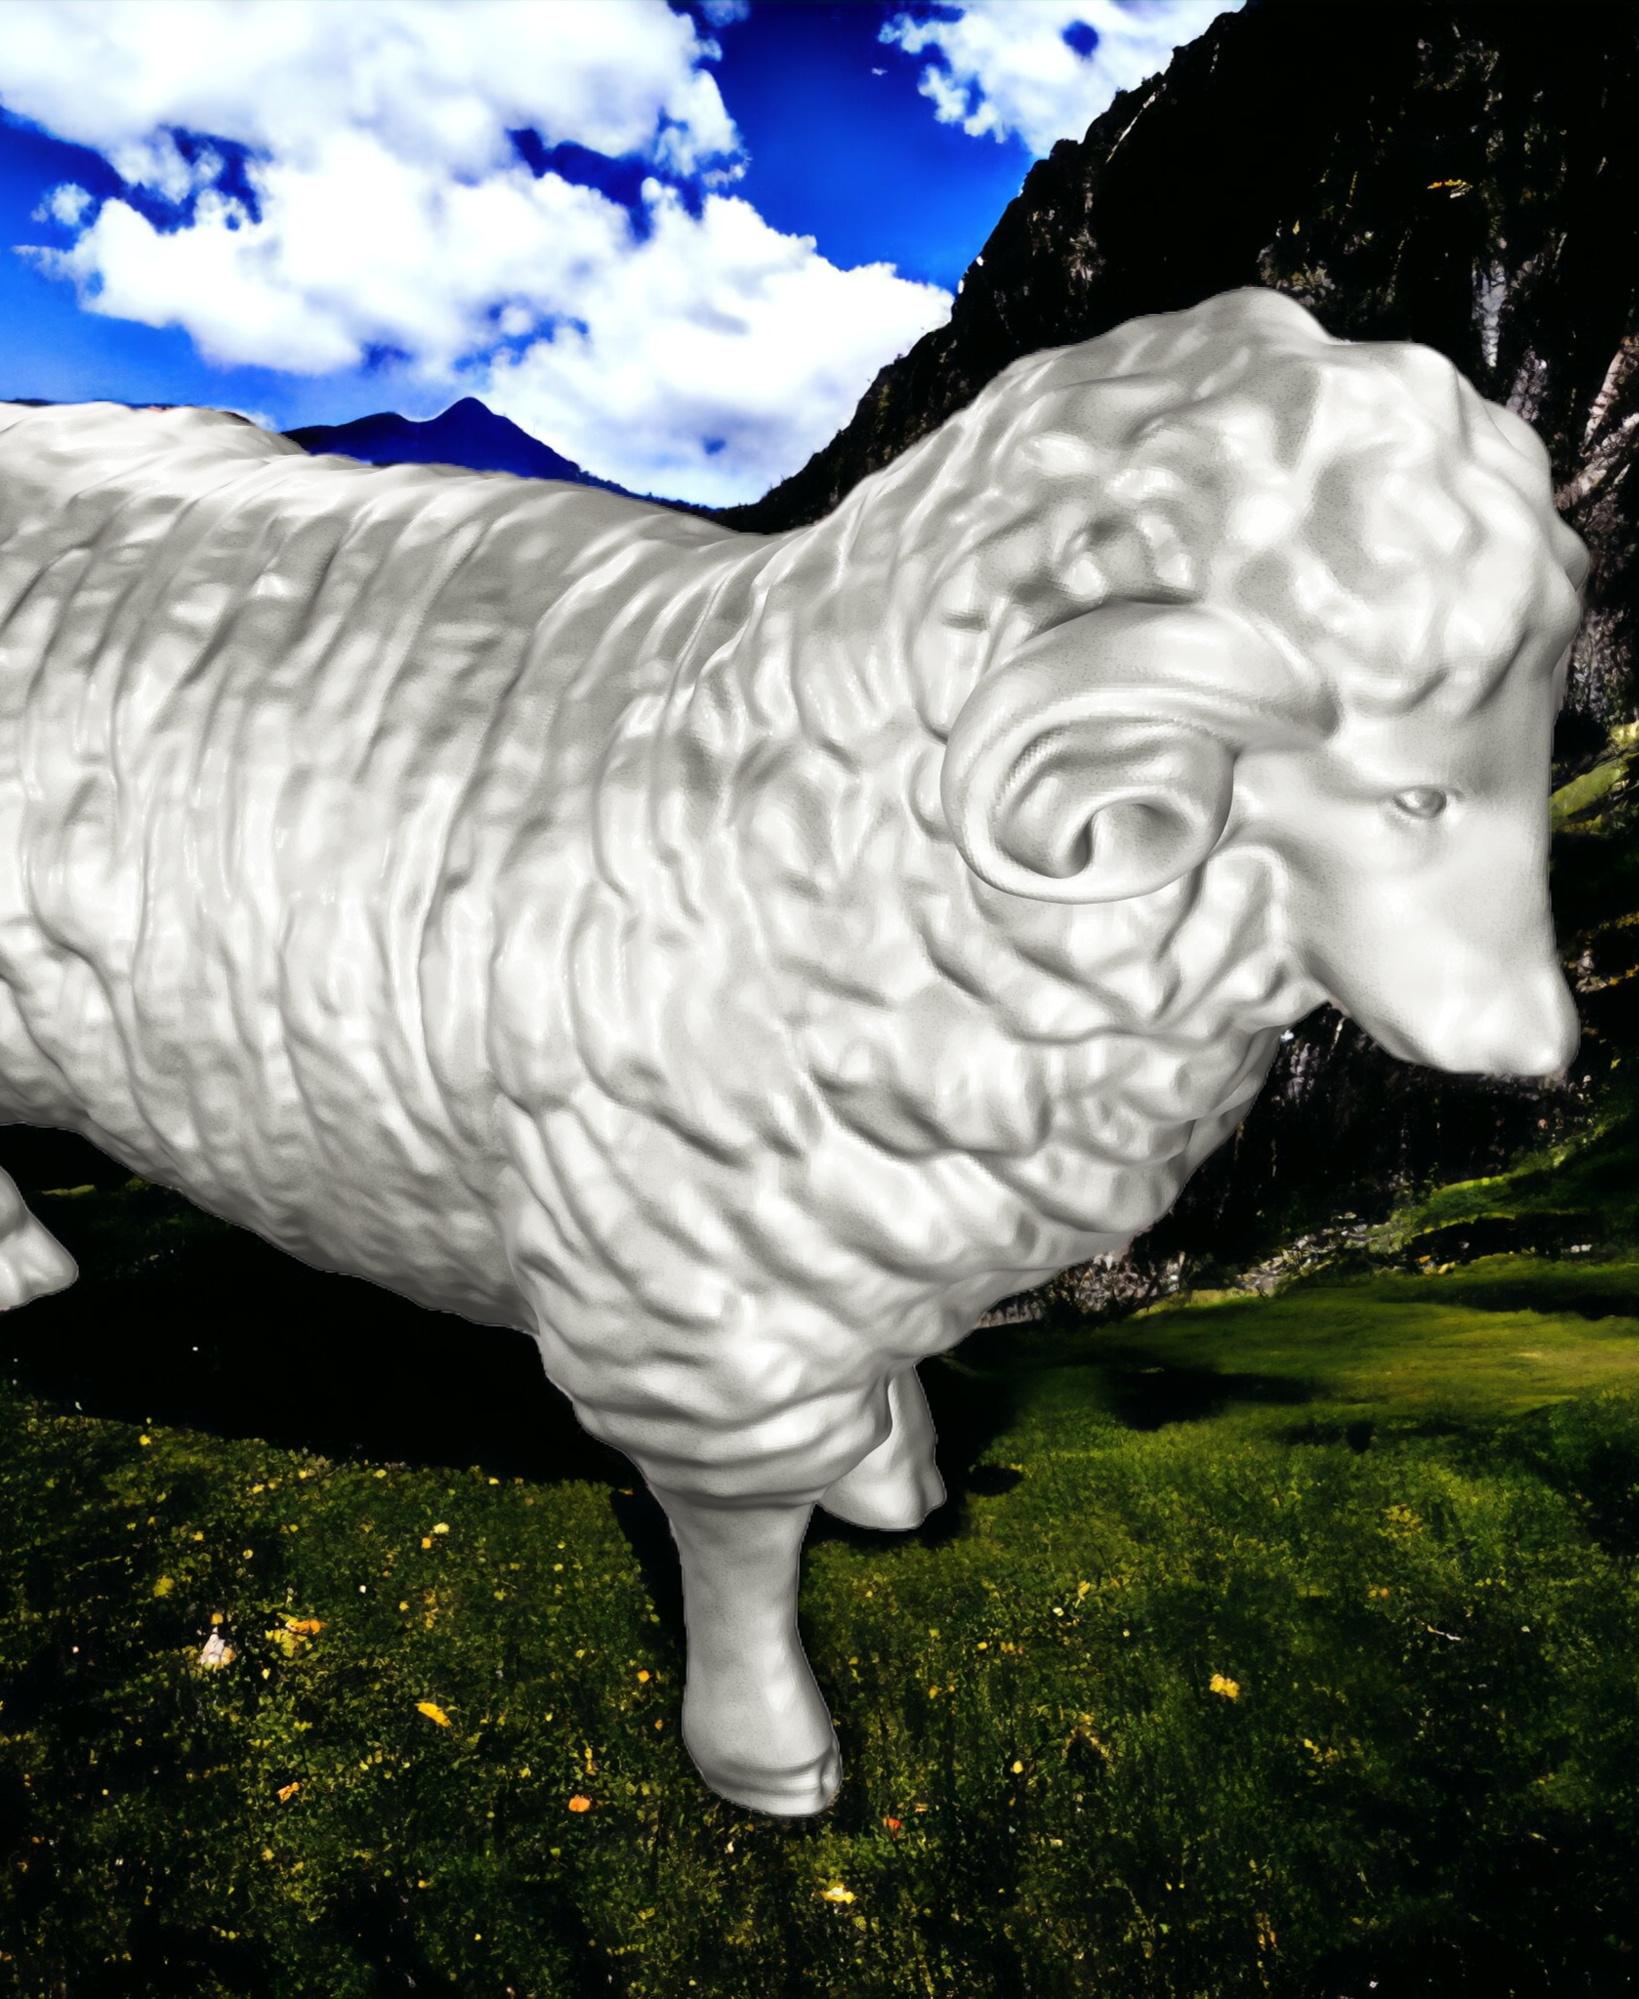 Sheep 3d model